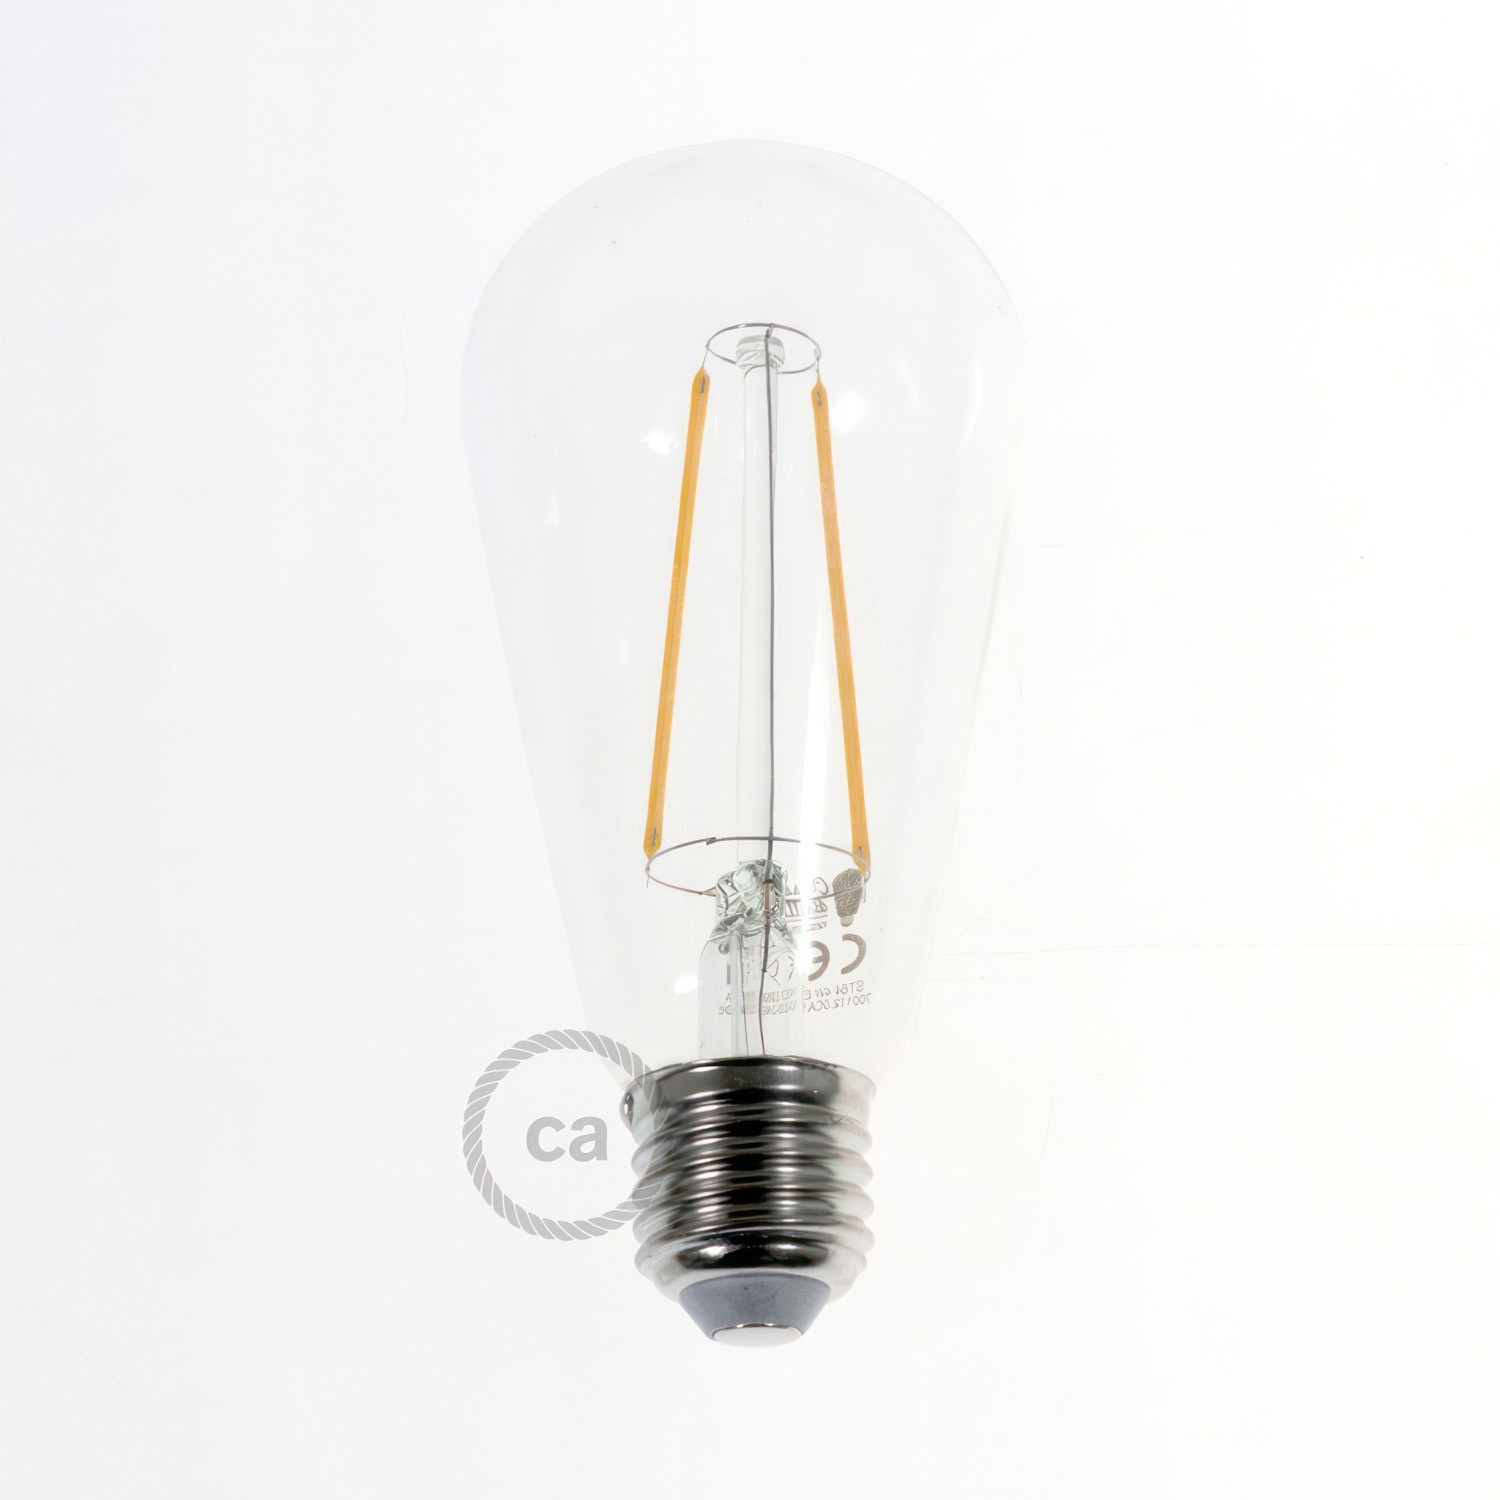 11-lys pendel lampe med 675 mm rektangulær XXL Rose-One, med stofkabel og Ghostbell lampeskærm i metal